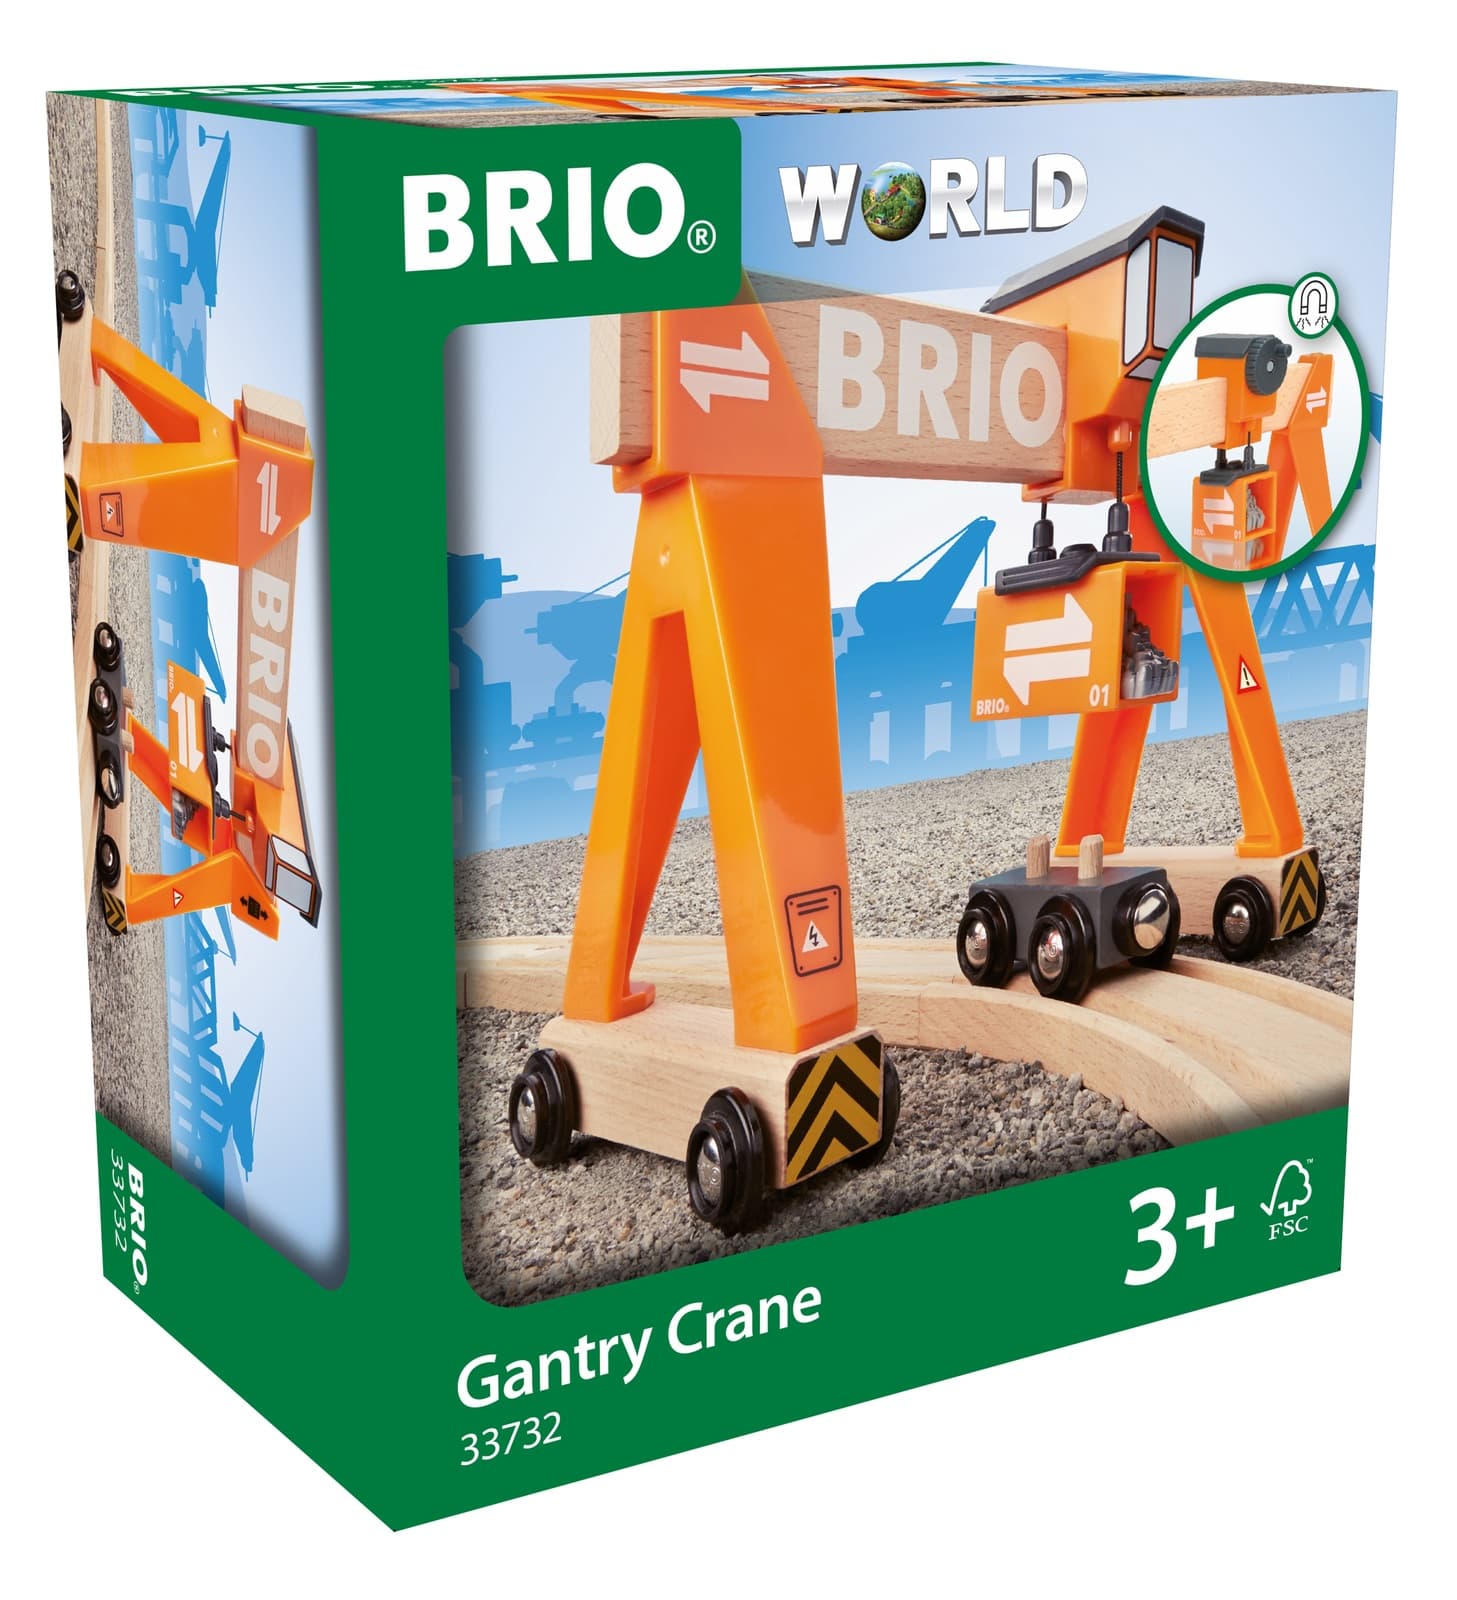 Brio Gantry Crane in box